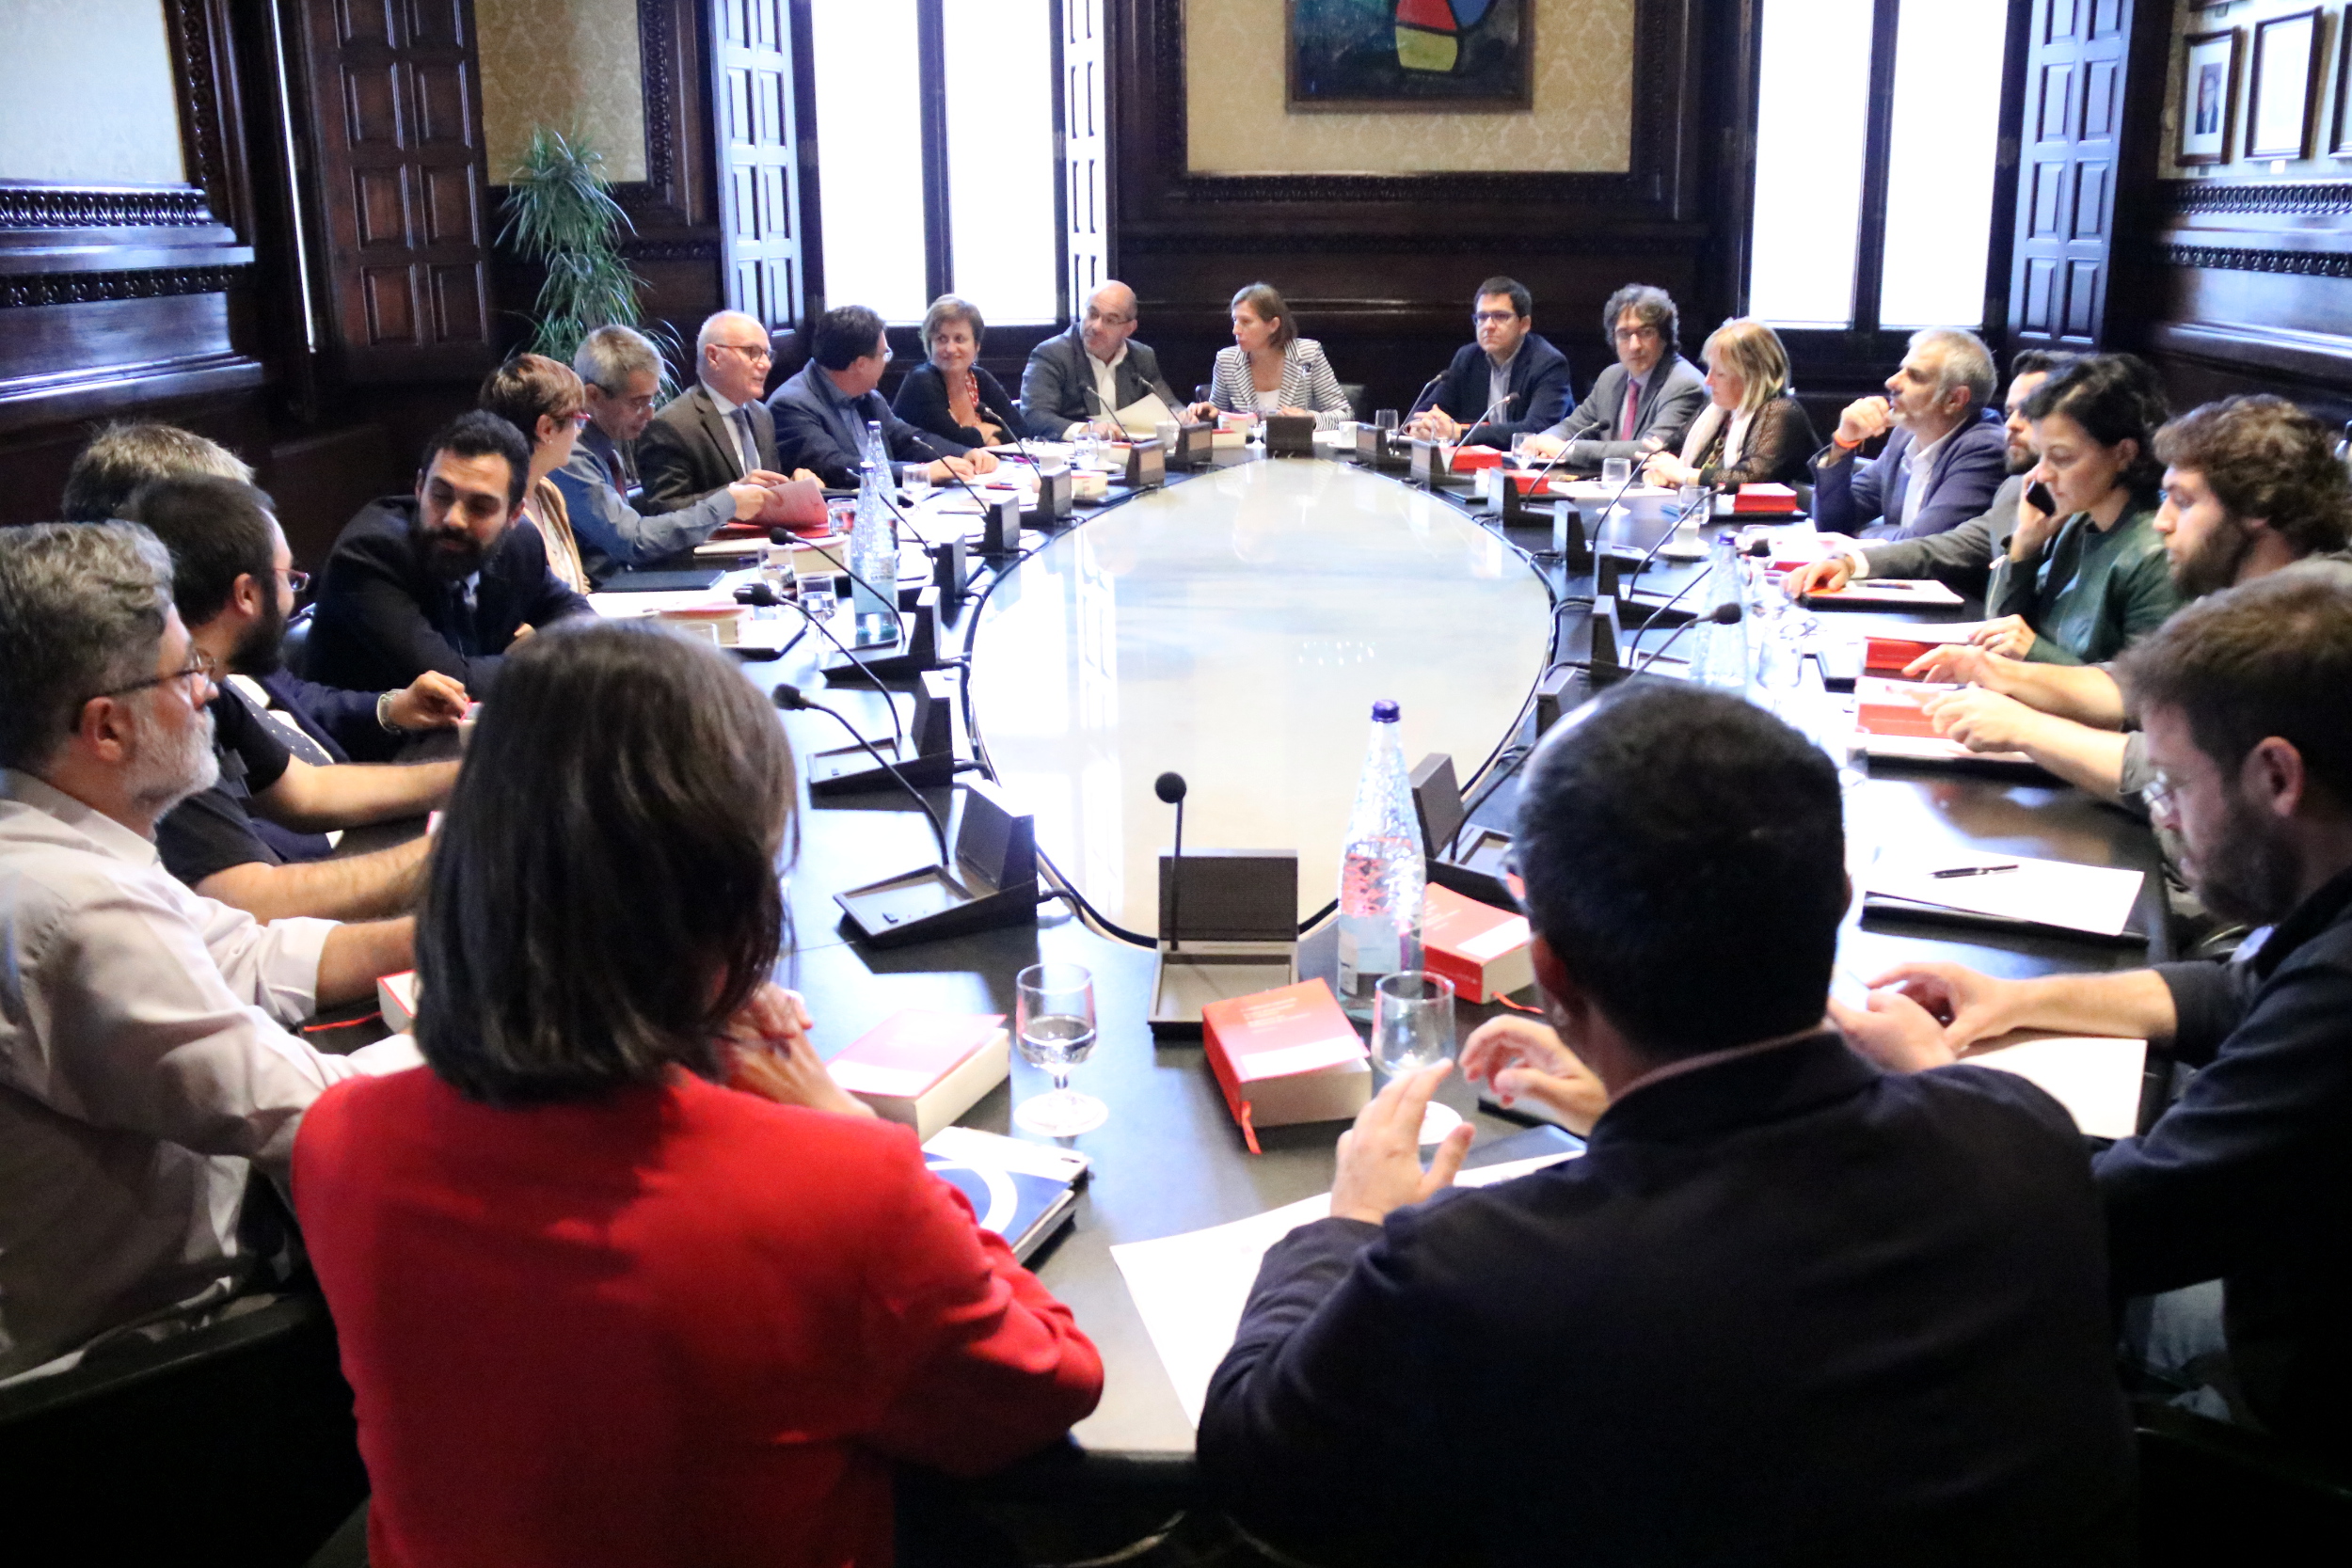 Catalan Parliament spokespersons meeting (by Núria Julià)